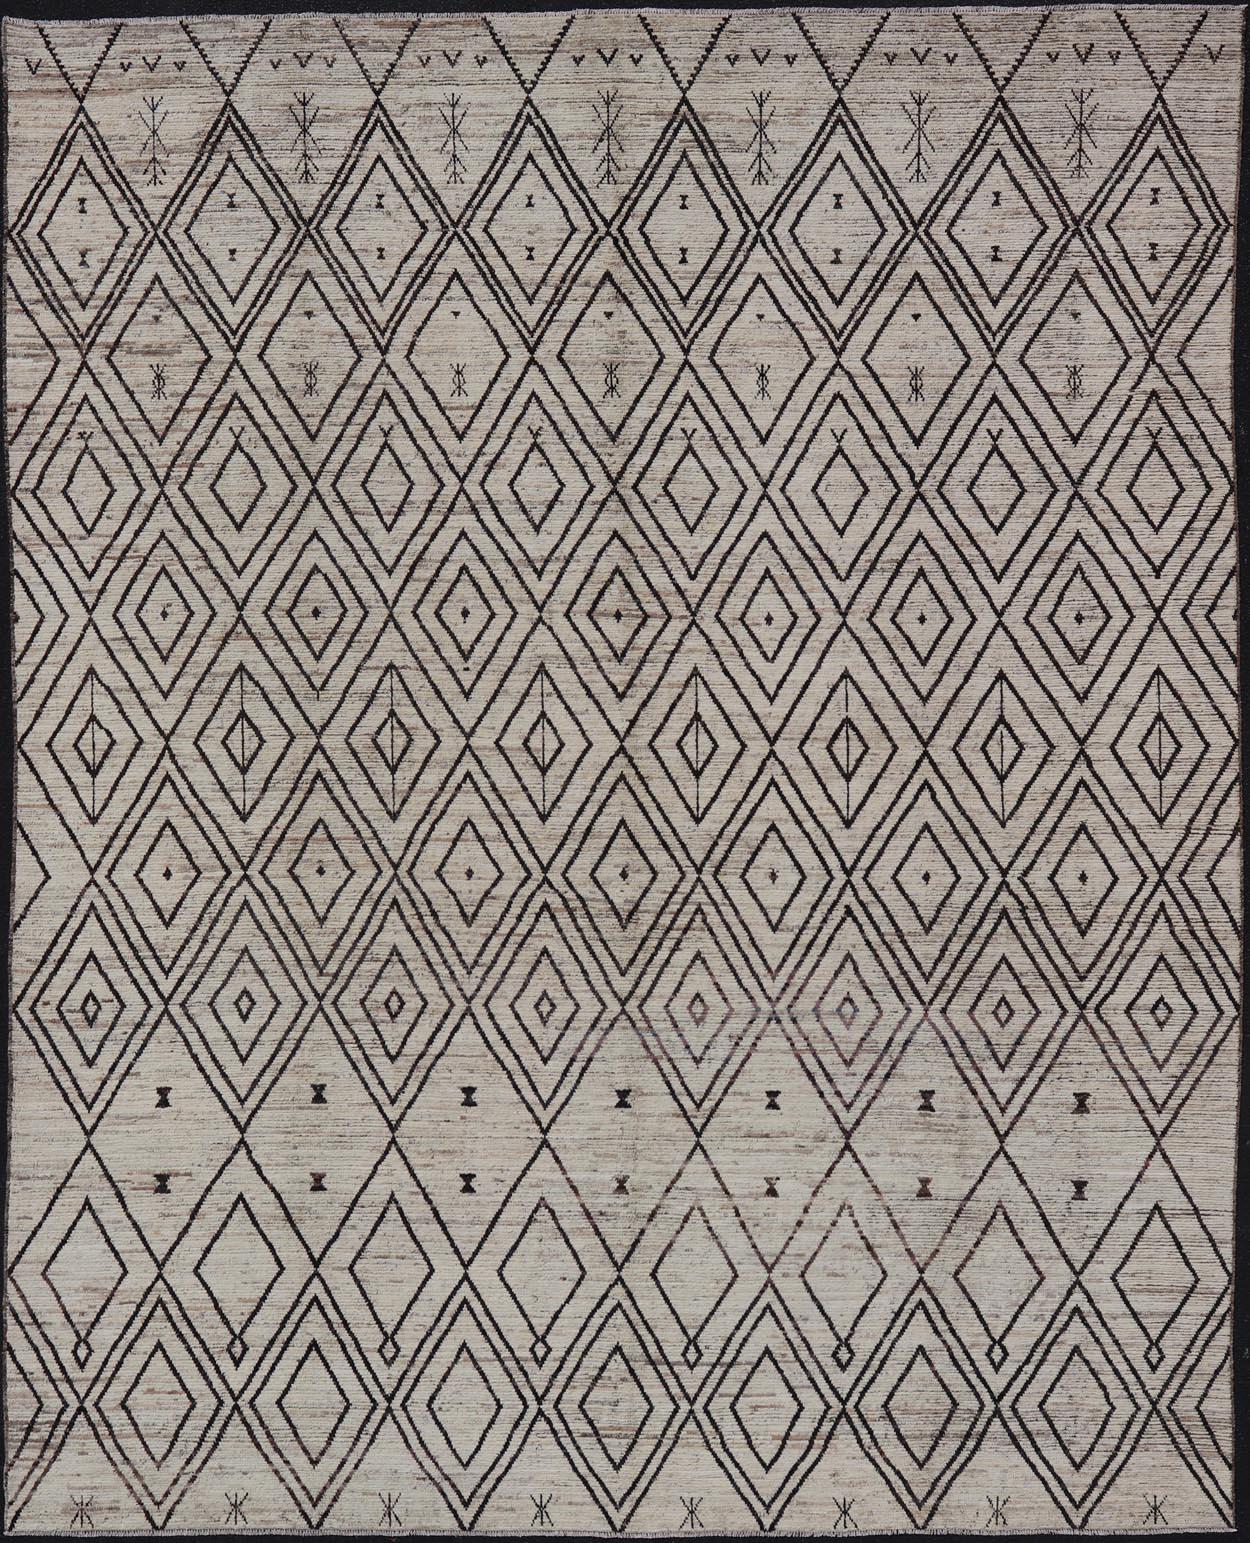  Tribal Moroccan Modern Rug in Wool with Geometric Diamond Design  For Sale 4